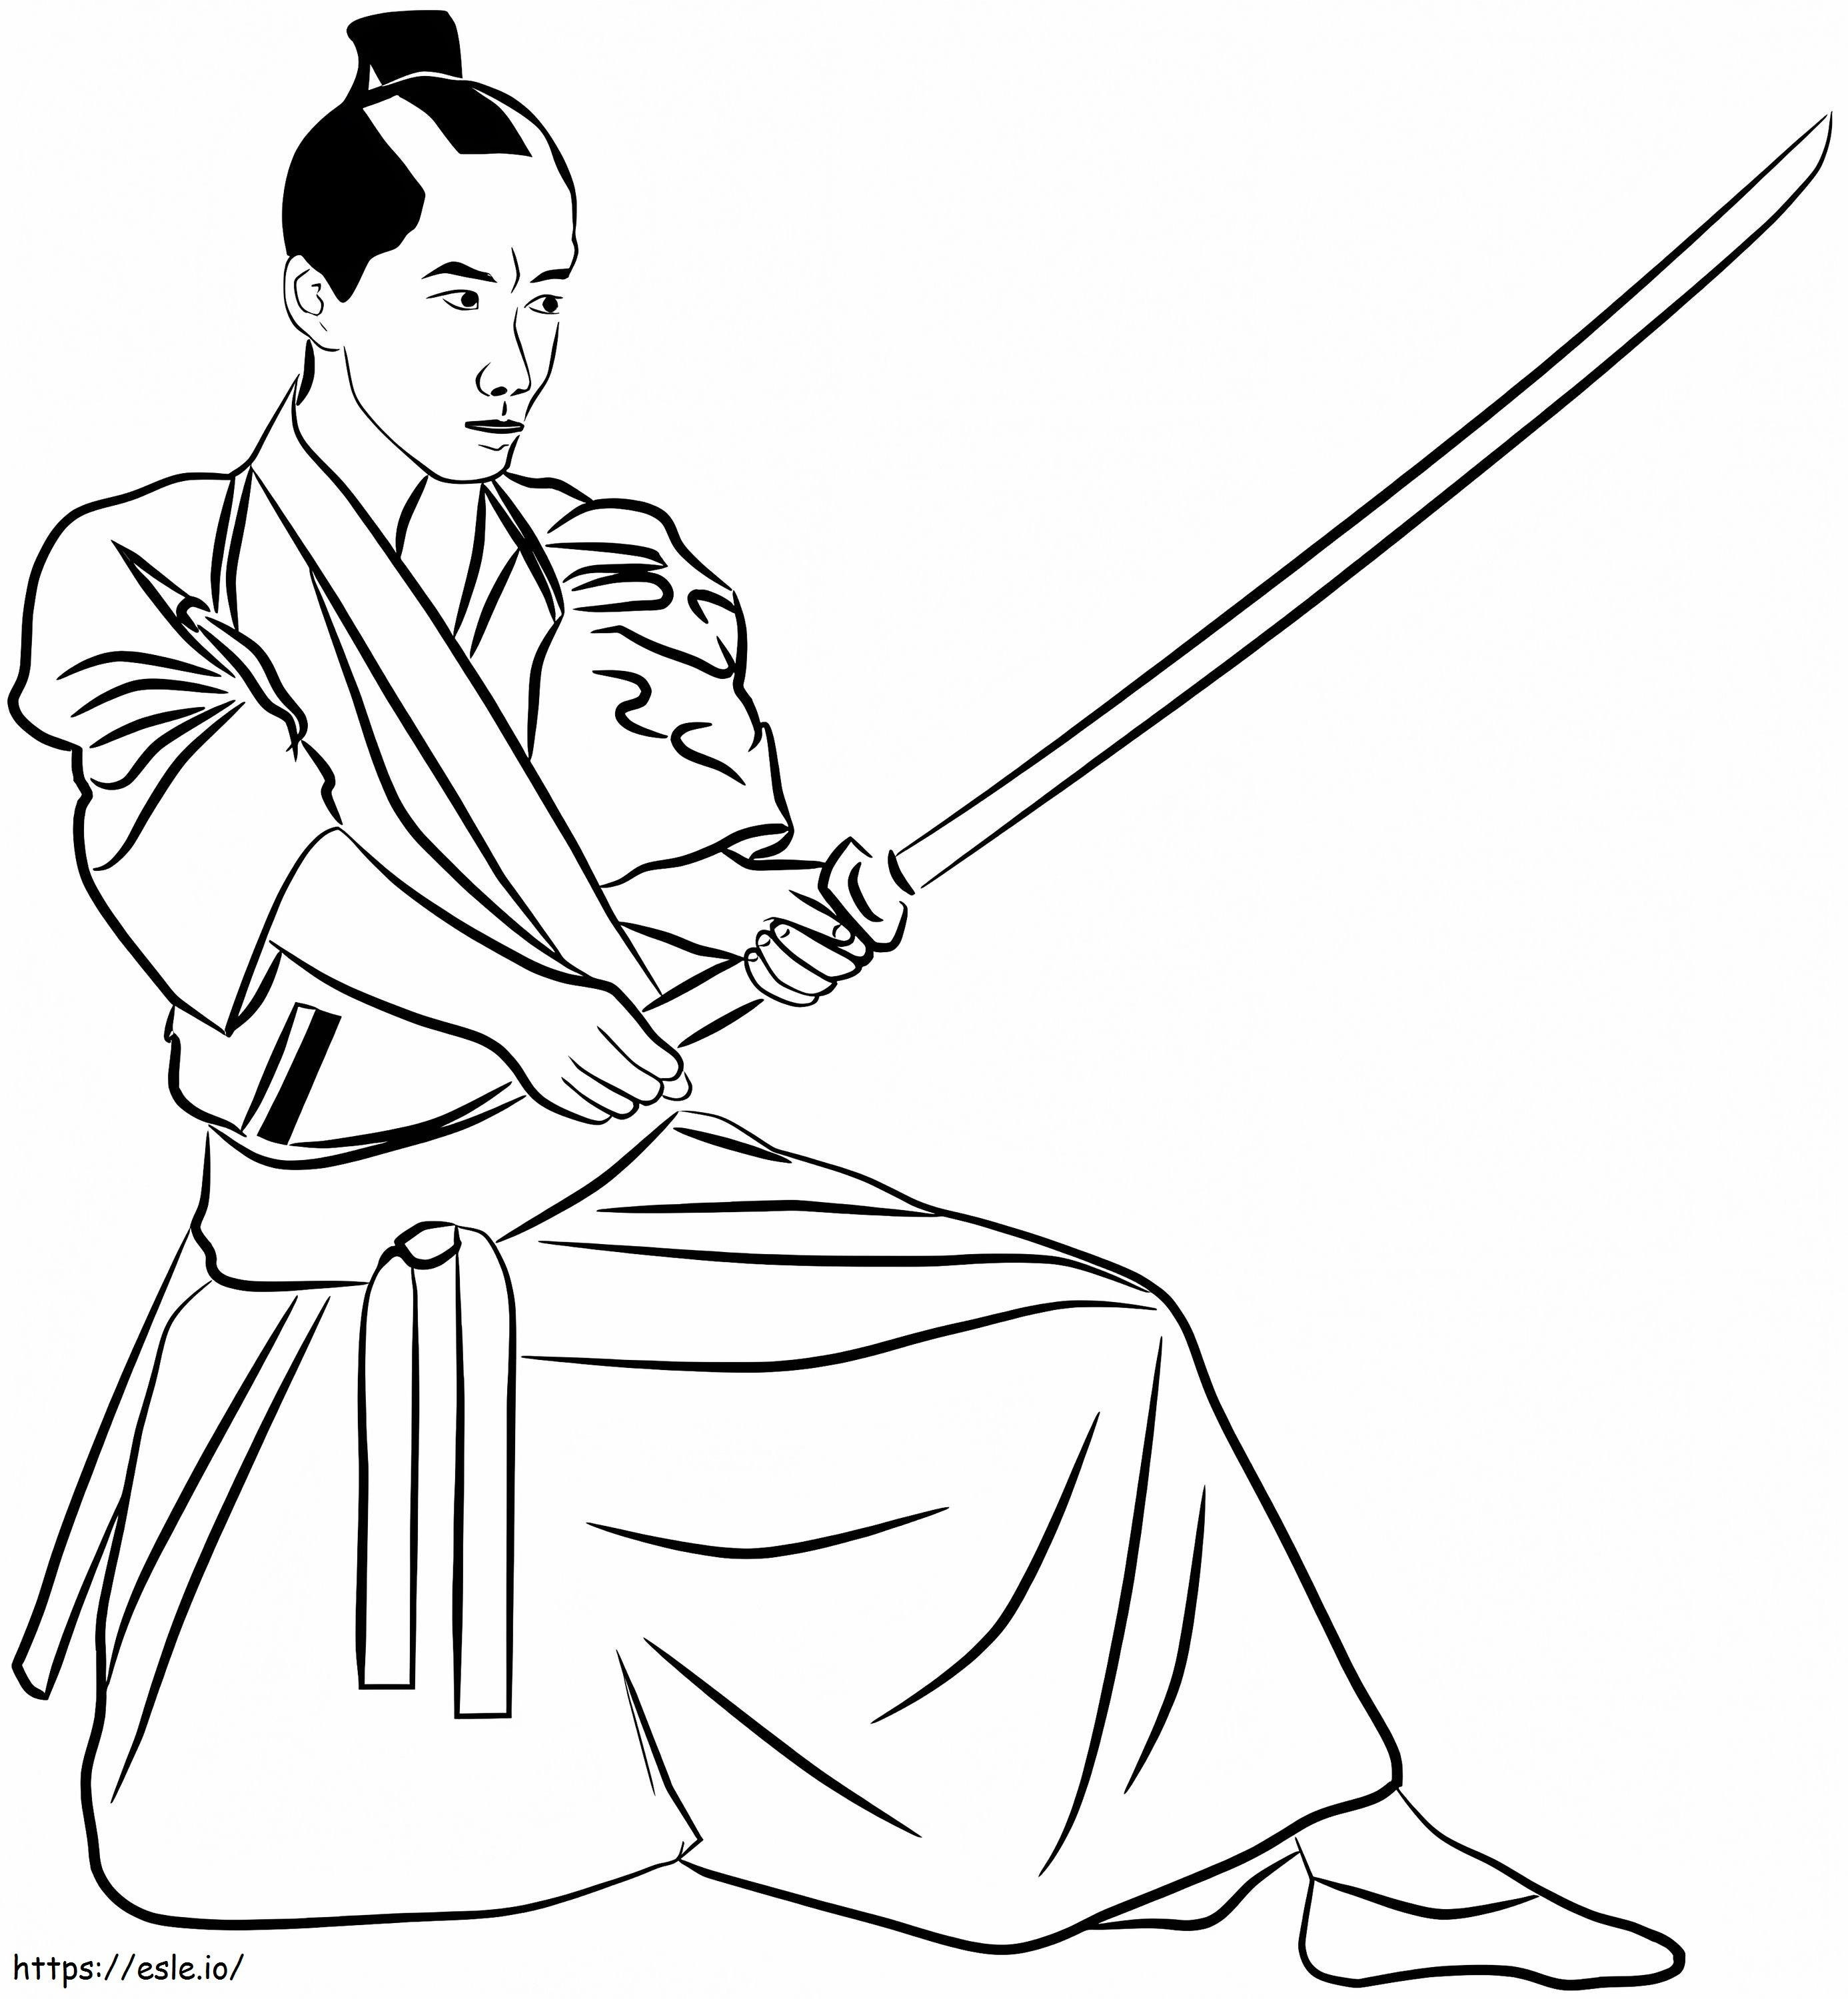 Simple Samurai coloring page